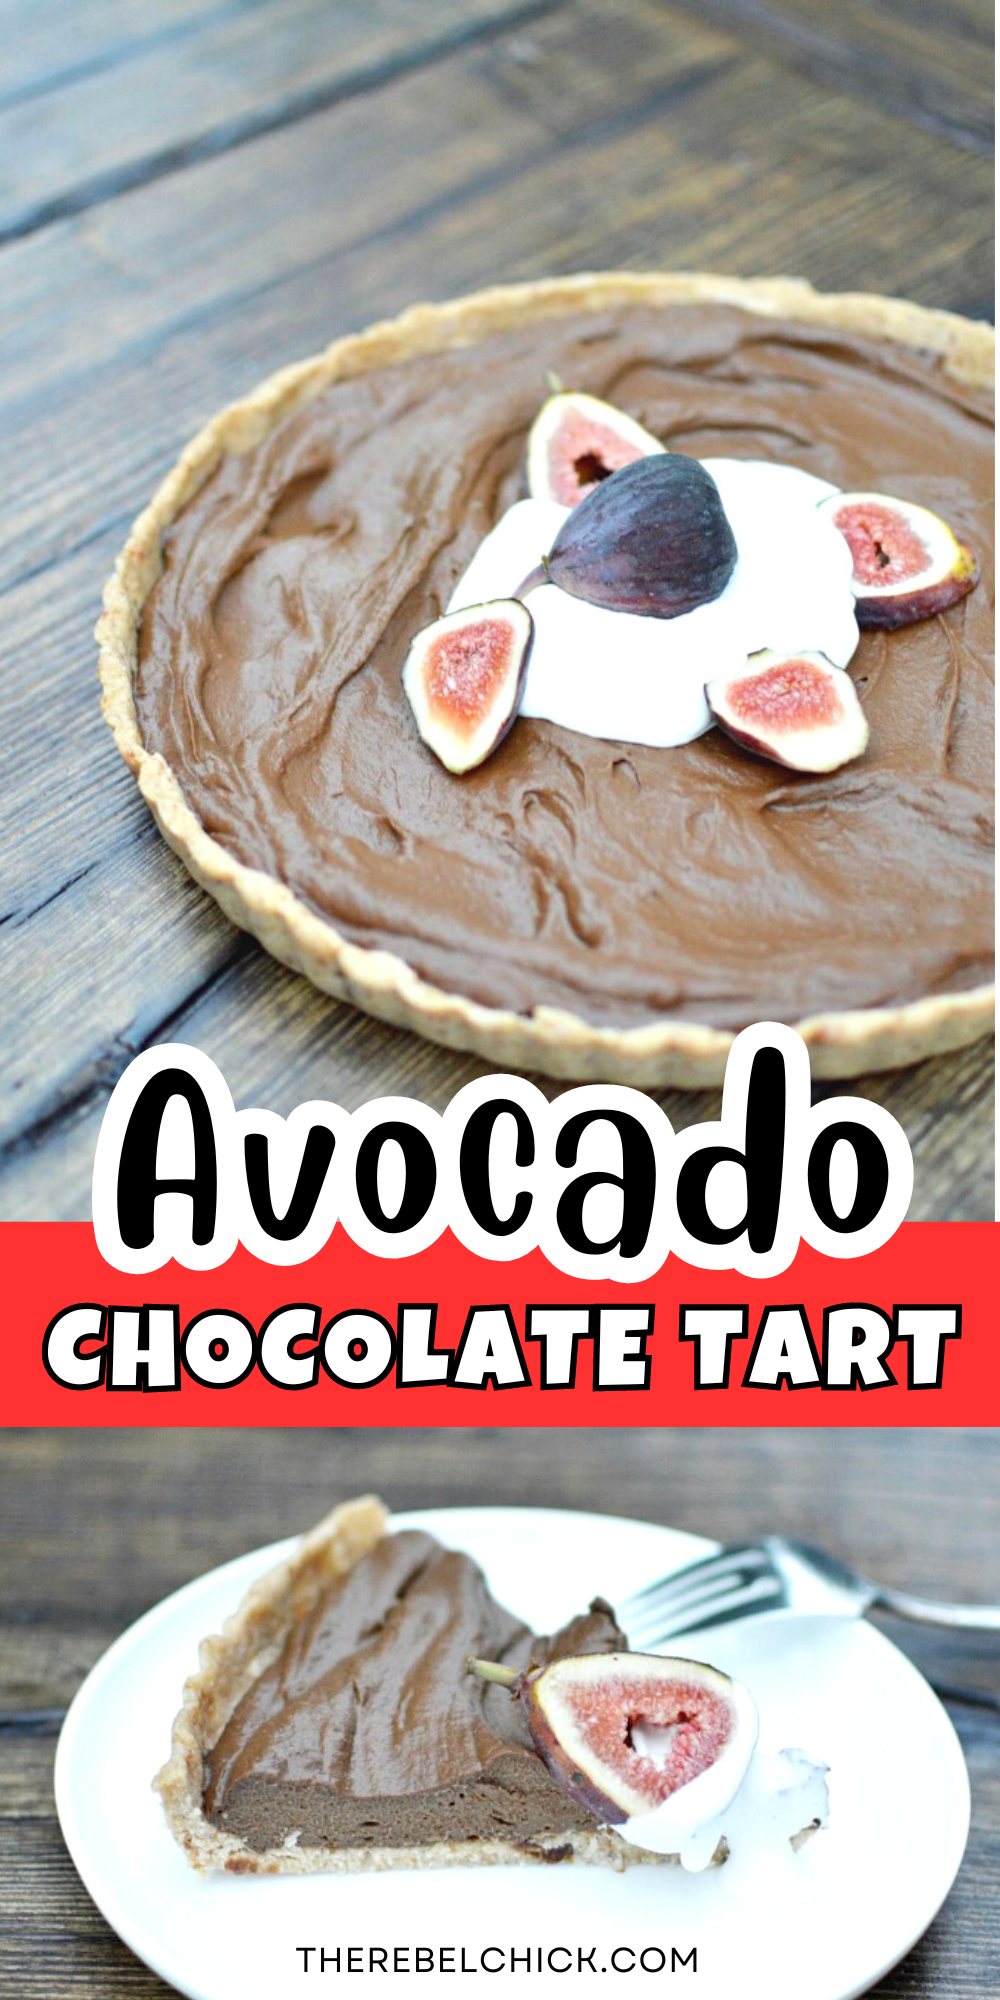 Avocado Chocolate Tart